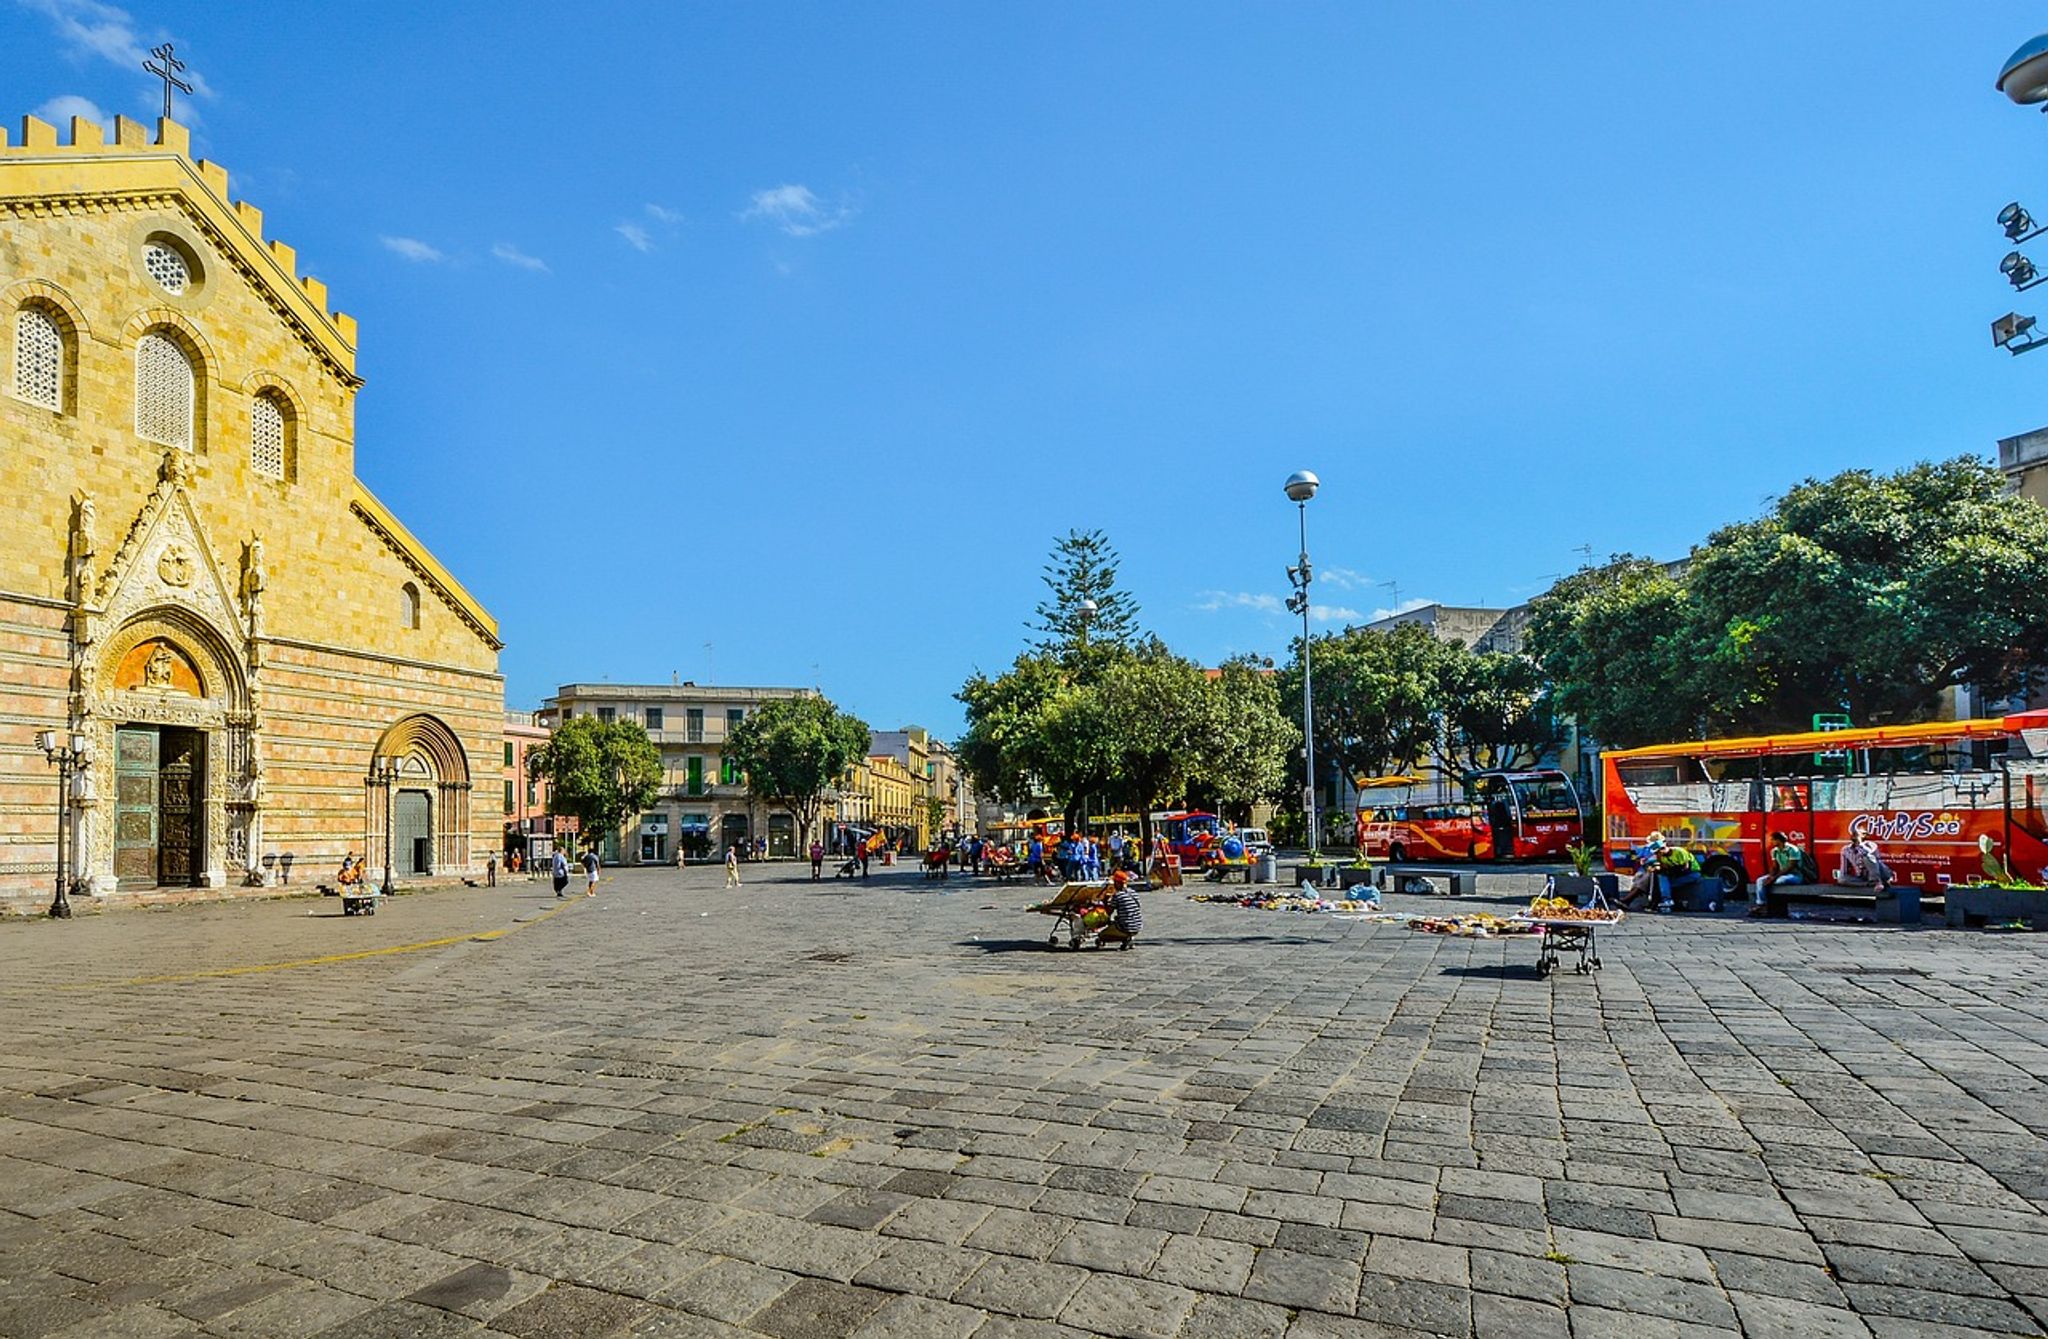 Die Besten Hotels in Messina